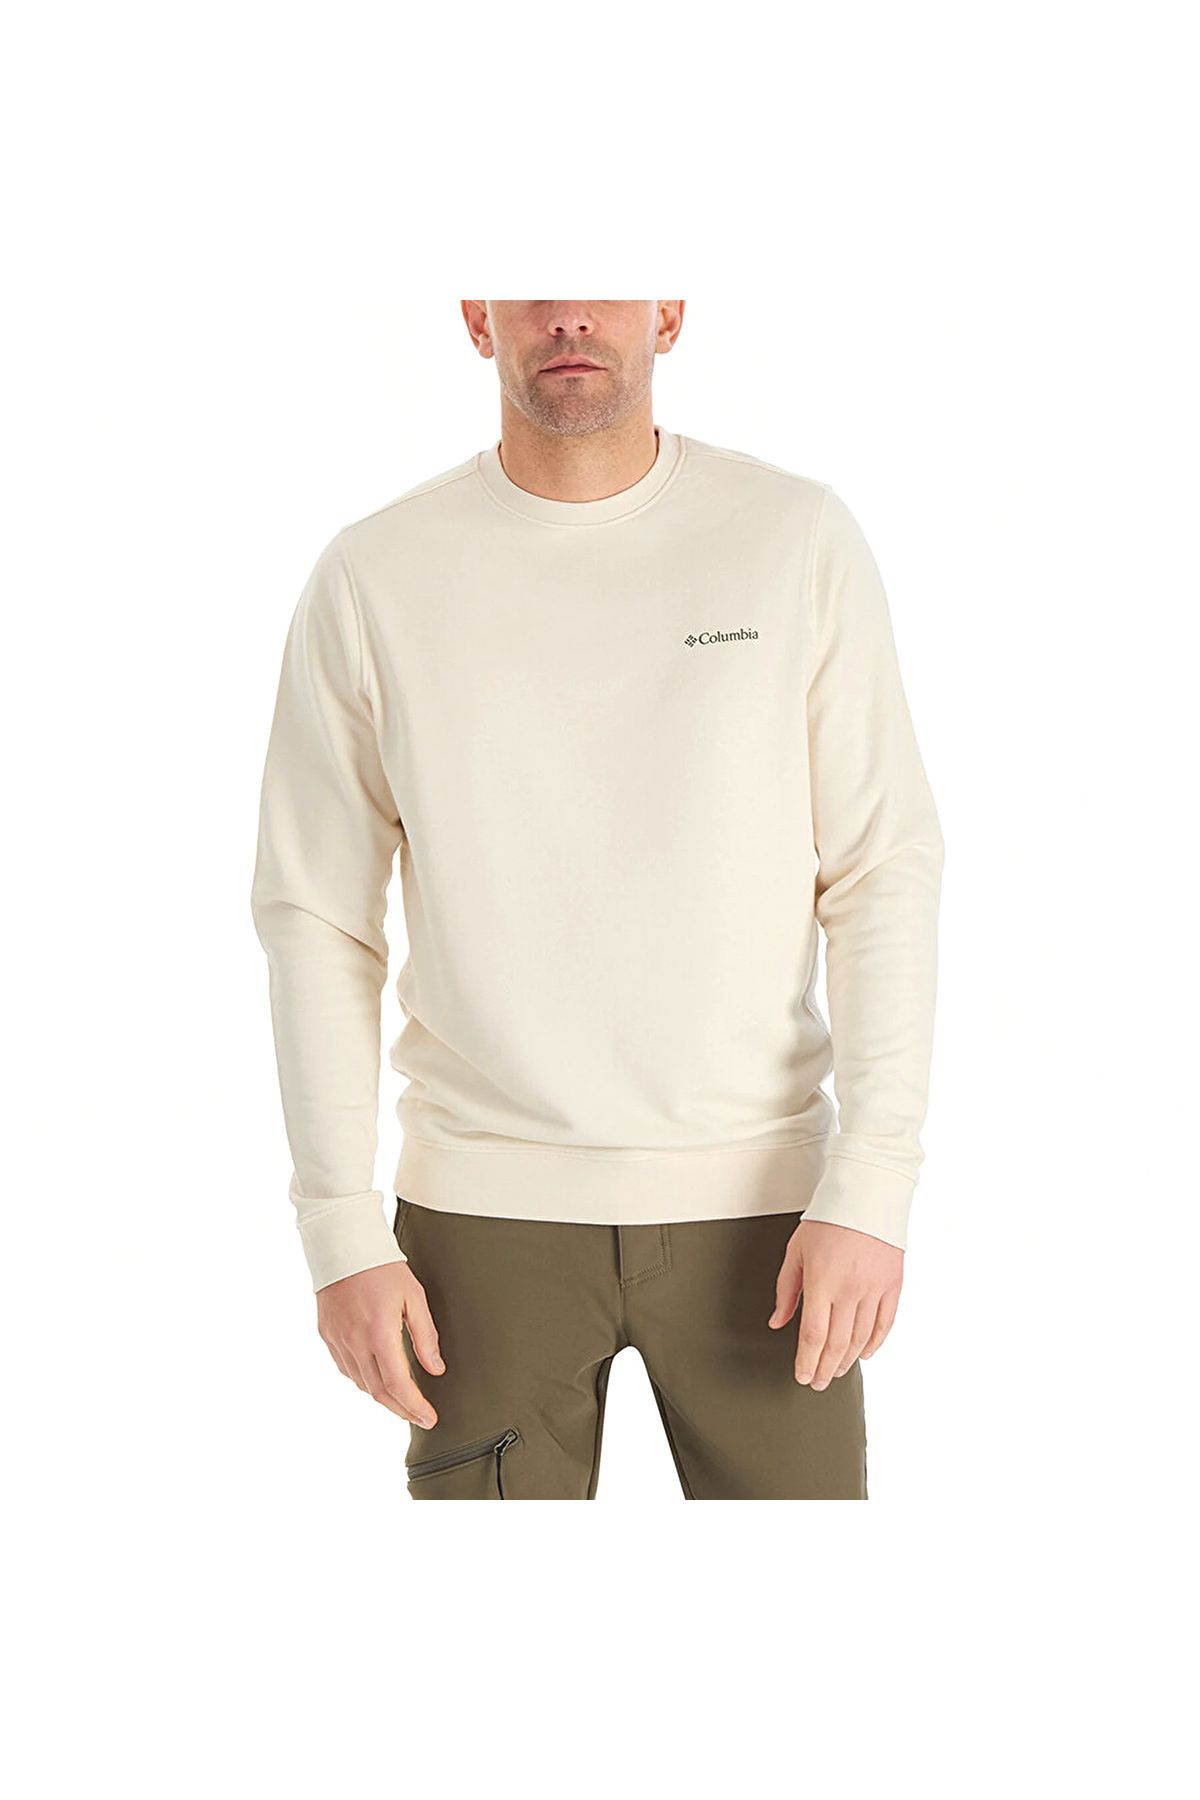 Columbia Basic Crew Erkek Bej Outdoor Sweatshirt Cs0204-190